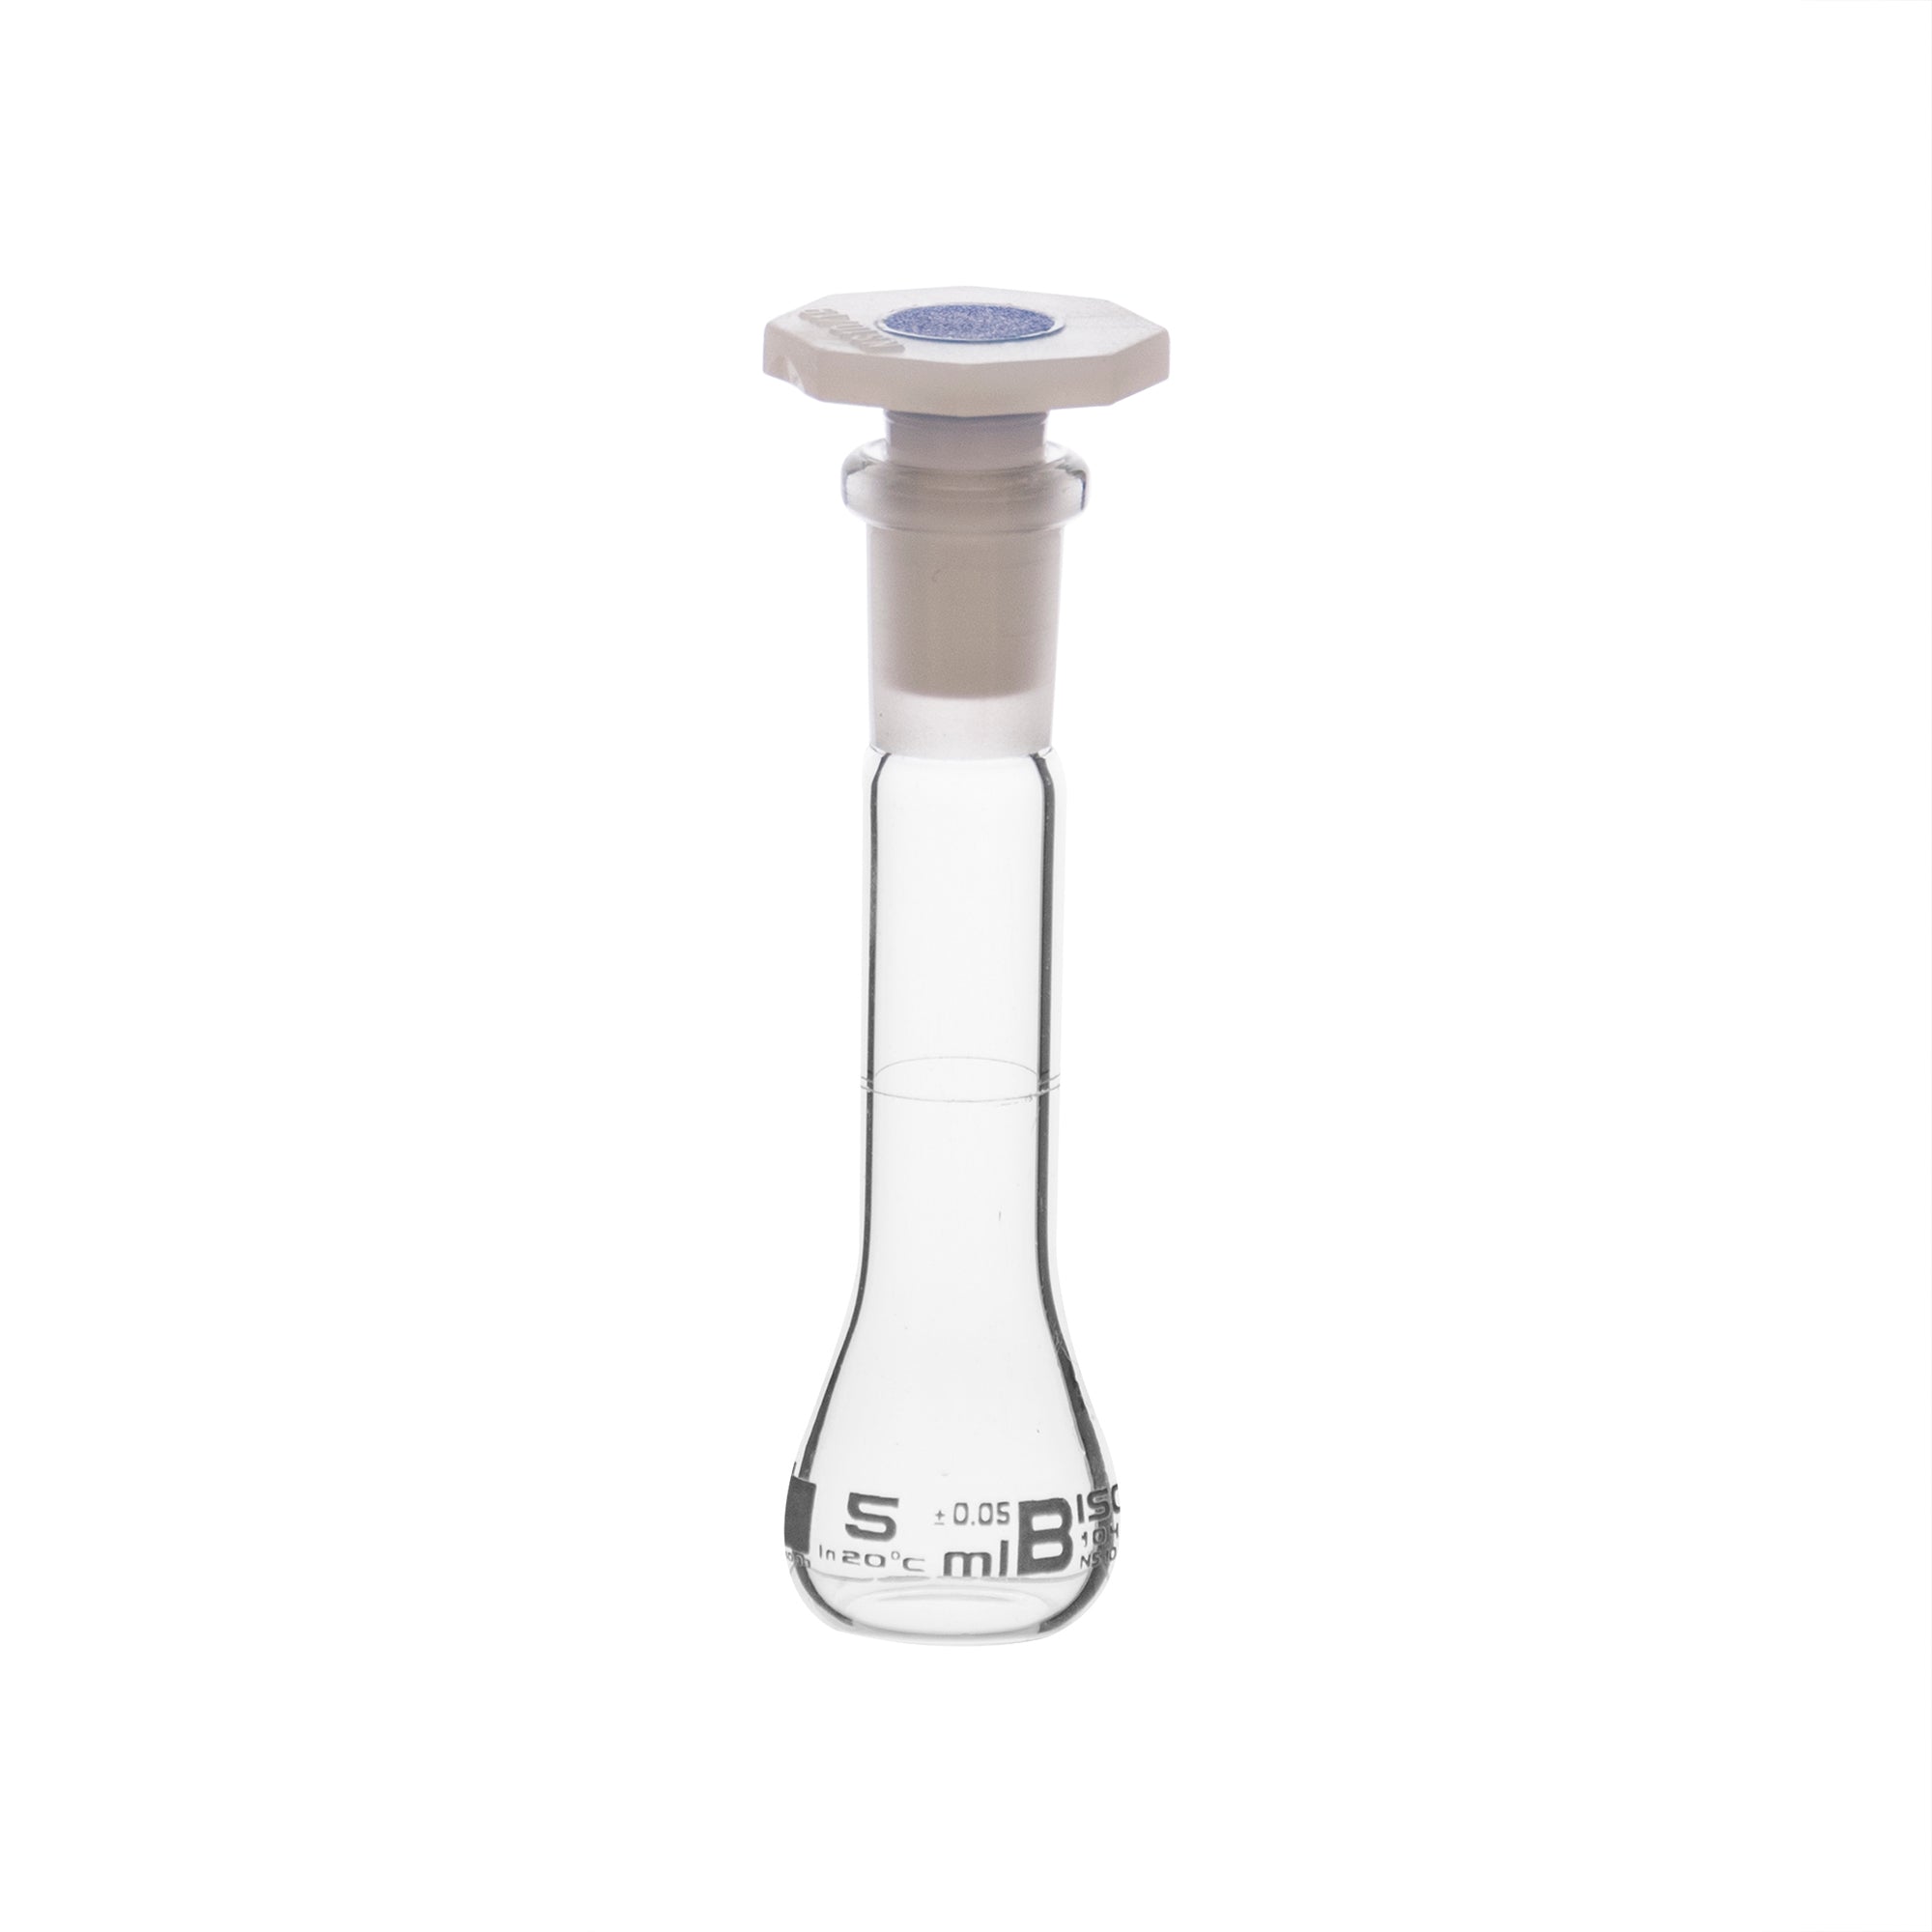 Borosilicate Glass Volumetric Flask with Polyethylene Stopper, 5ml, Class B, White Print, Autoclavable